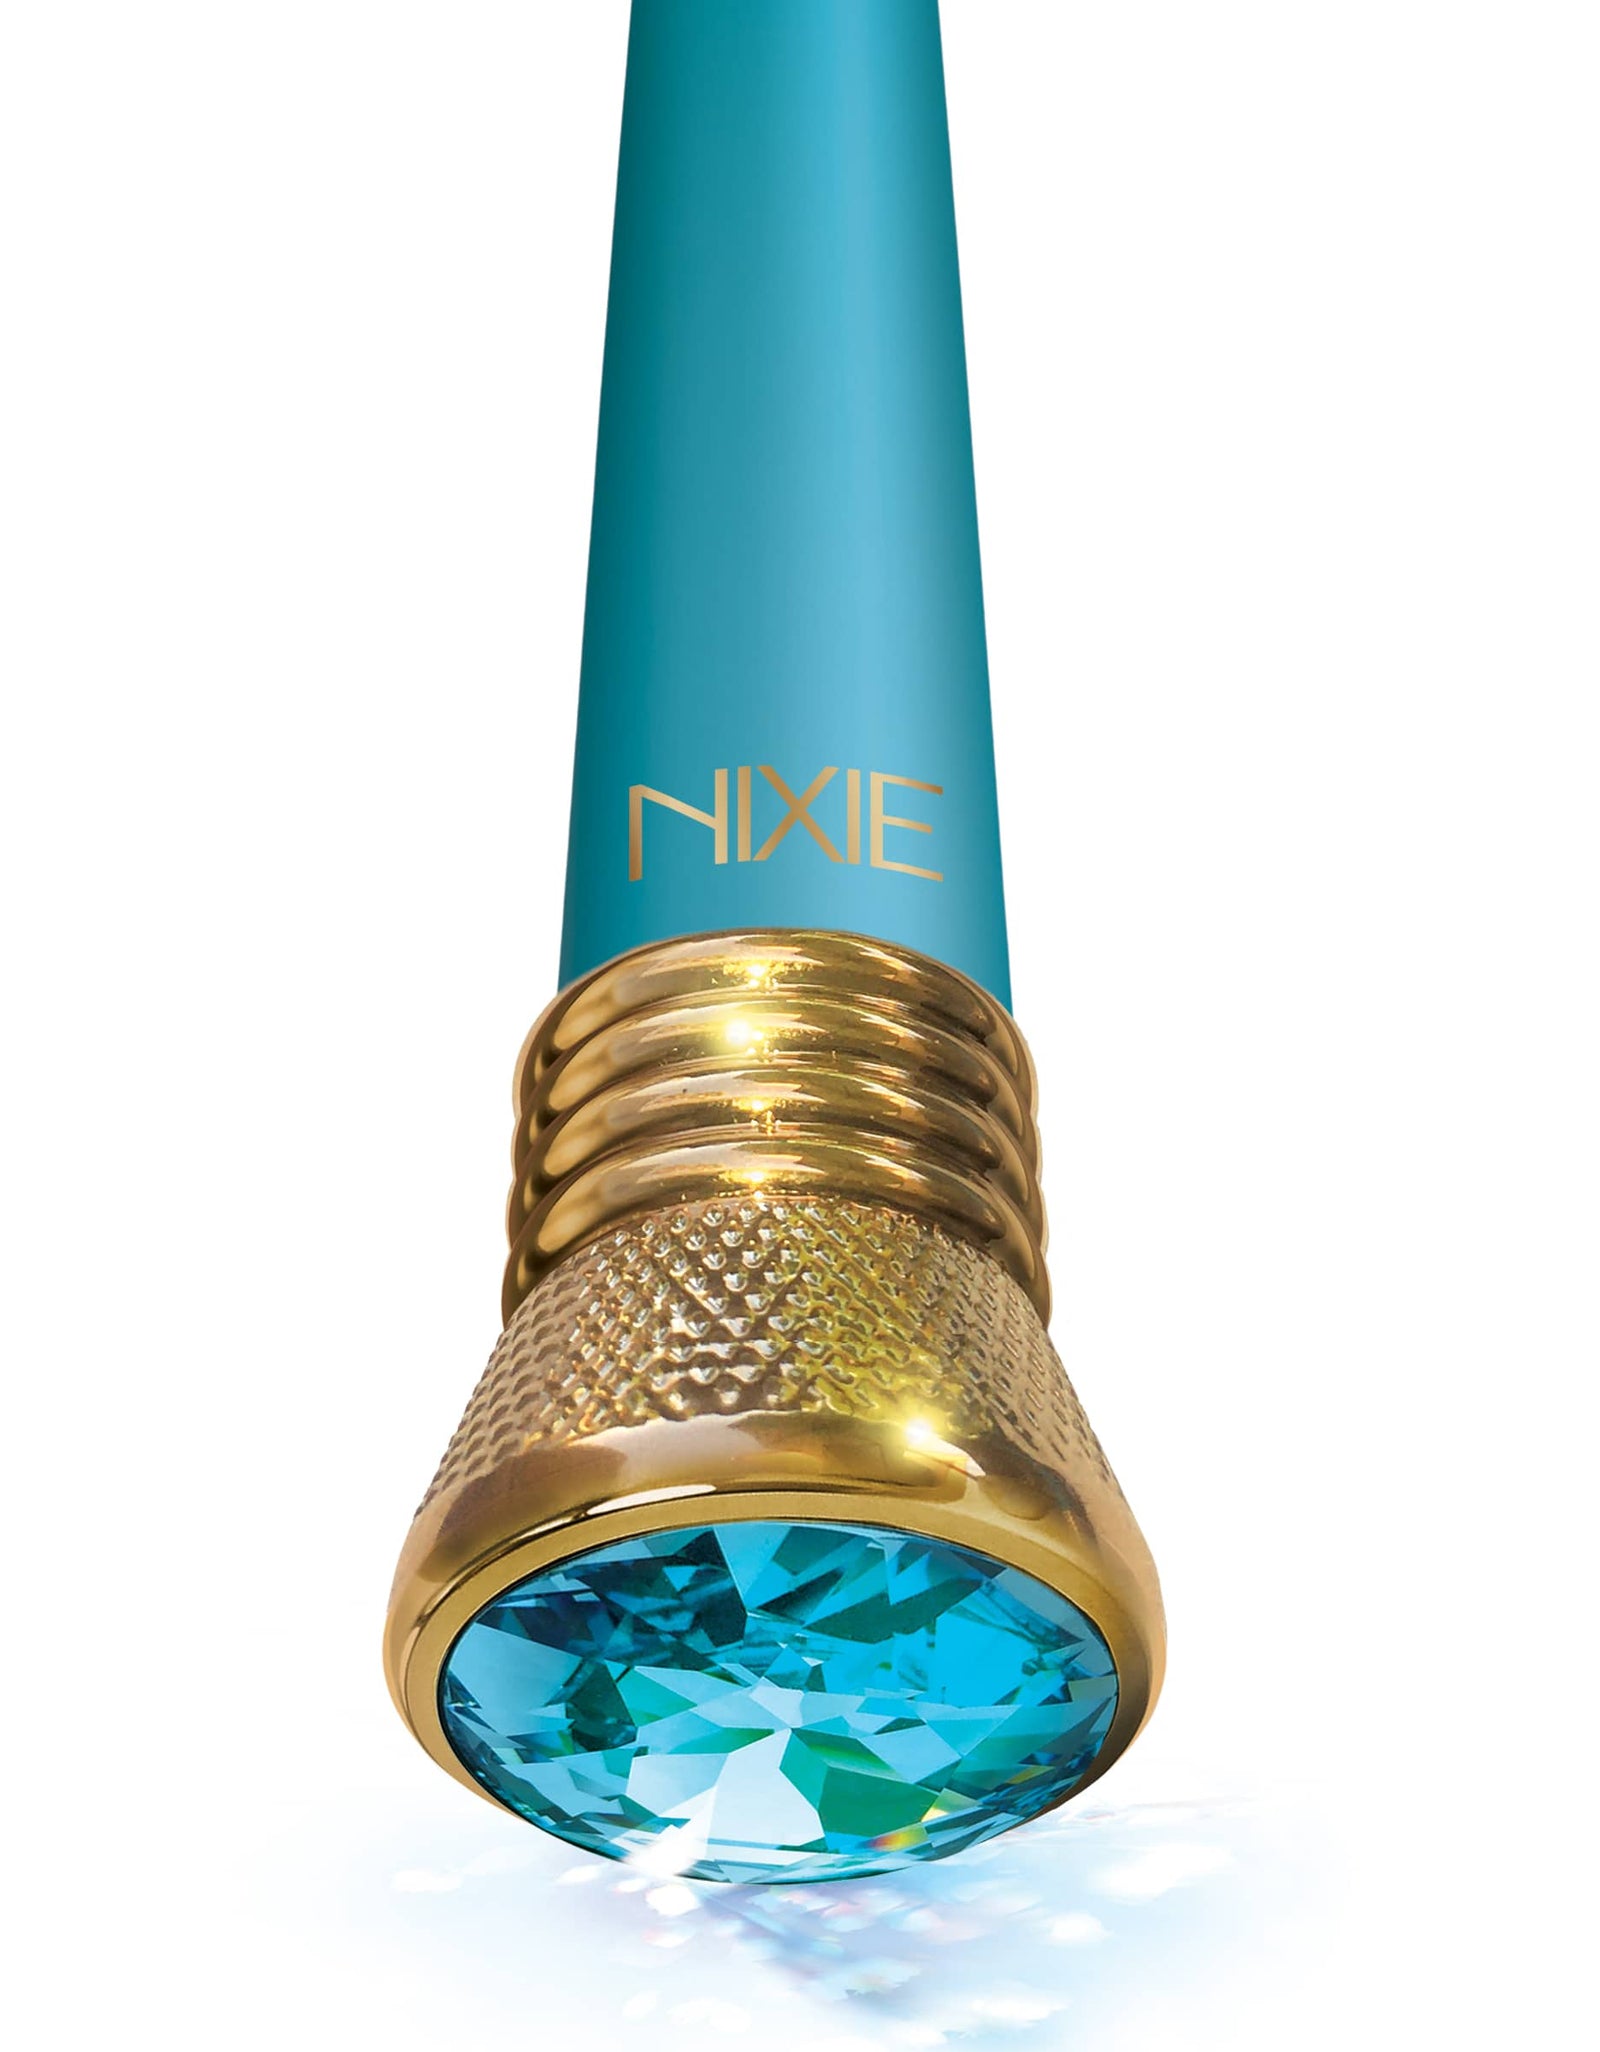 Nixie Jewel Satin Classic Vibrator, 10 Function, Aquamarine w/storage bag - The Happy Ending Shop